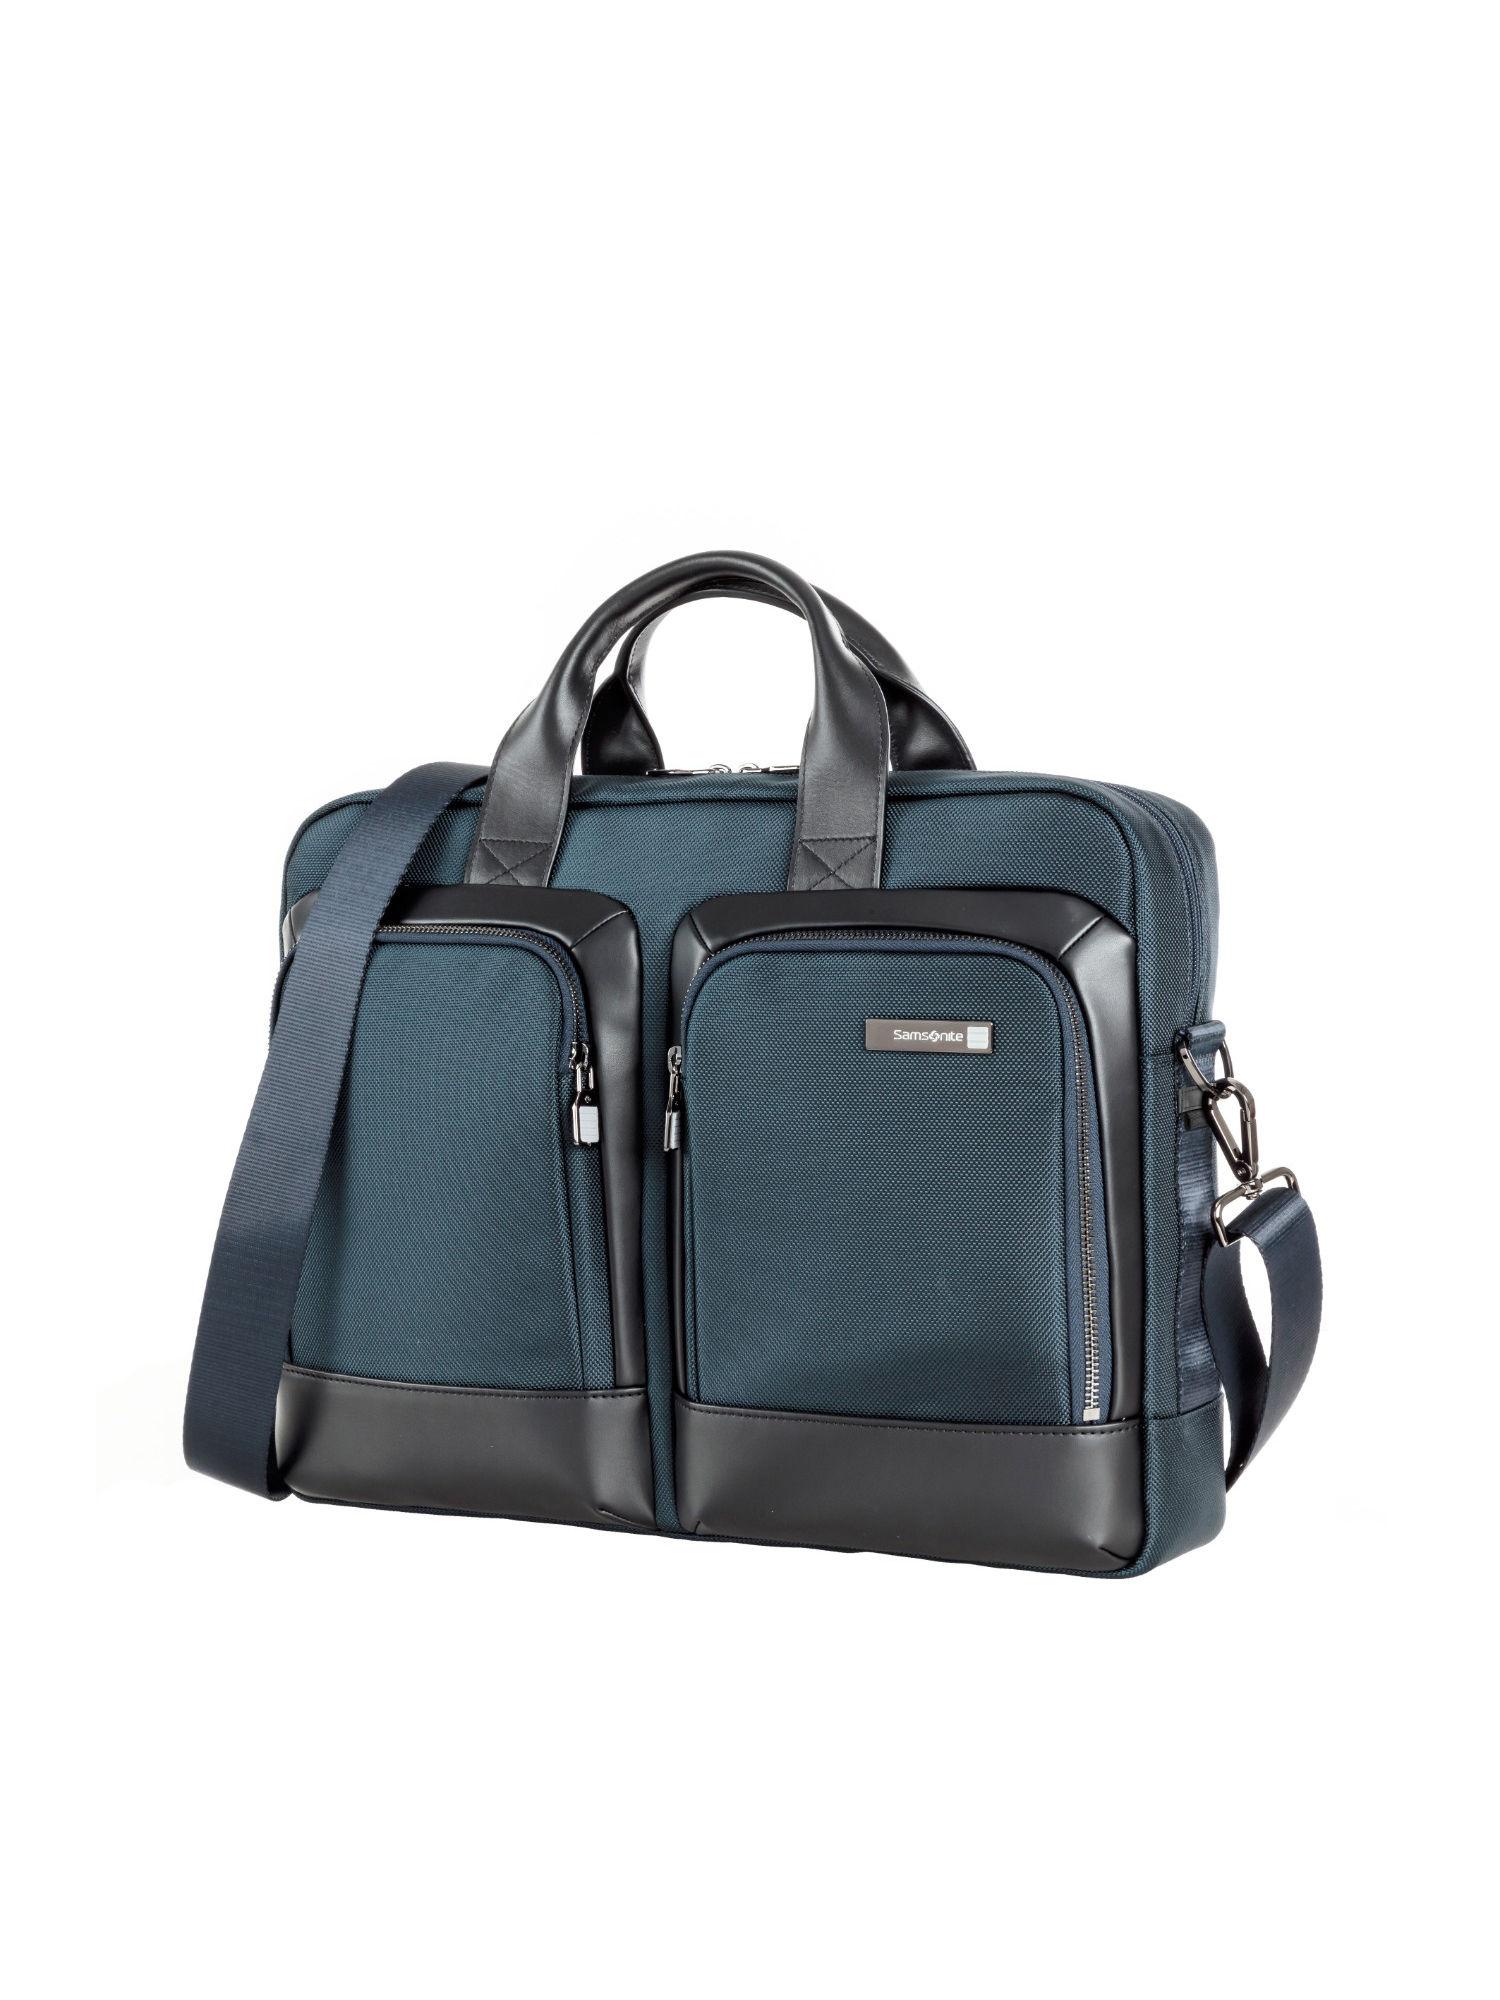 sefton laptop bag bailhandle -in-navy blue